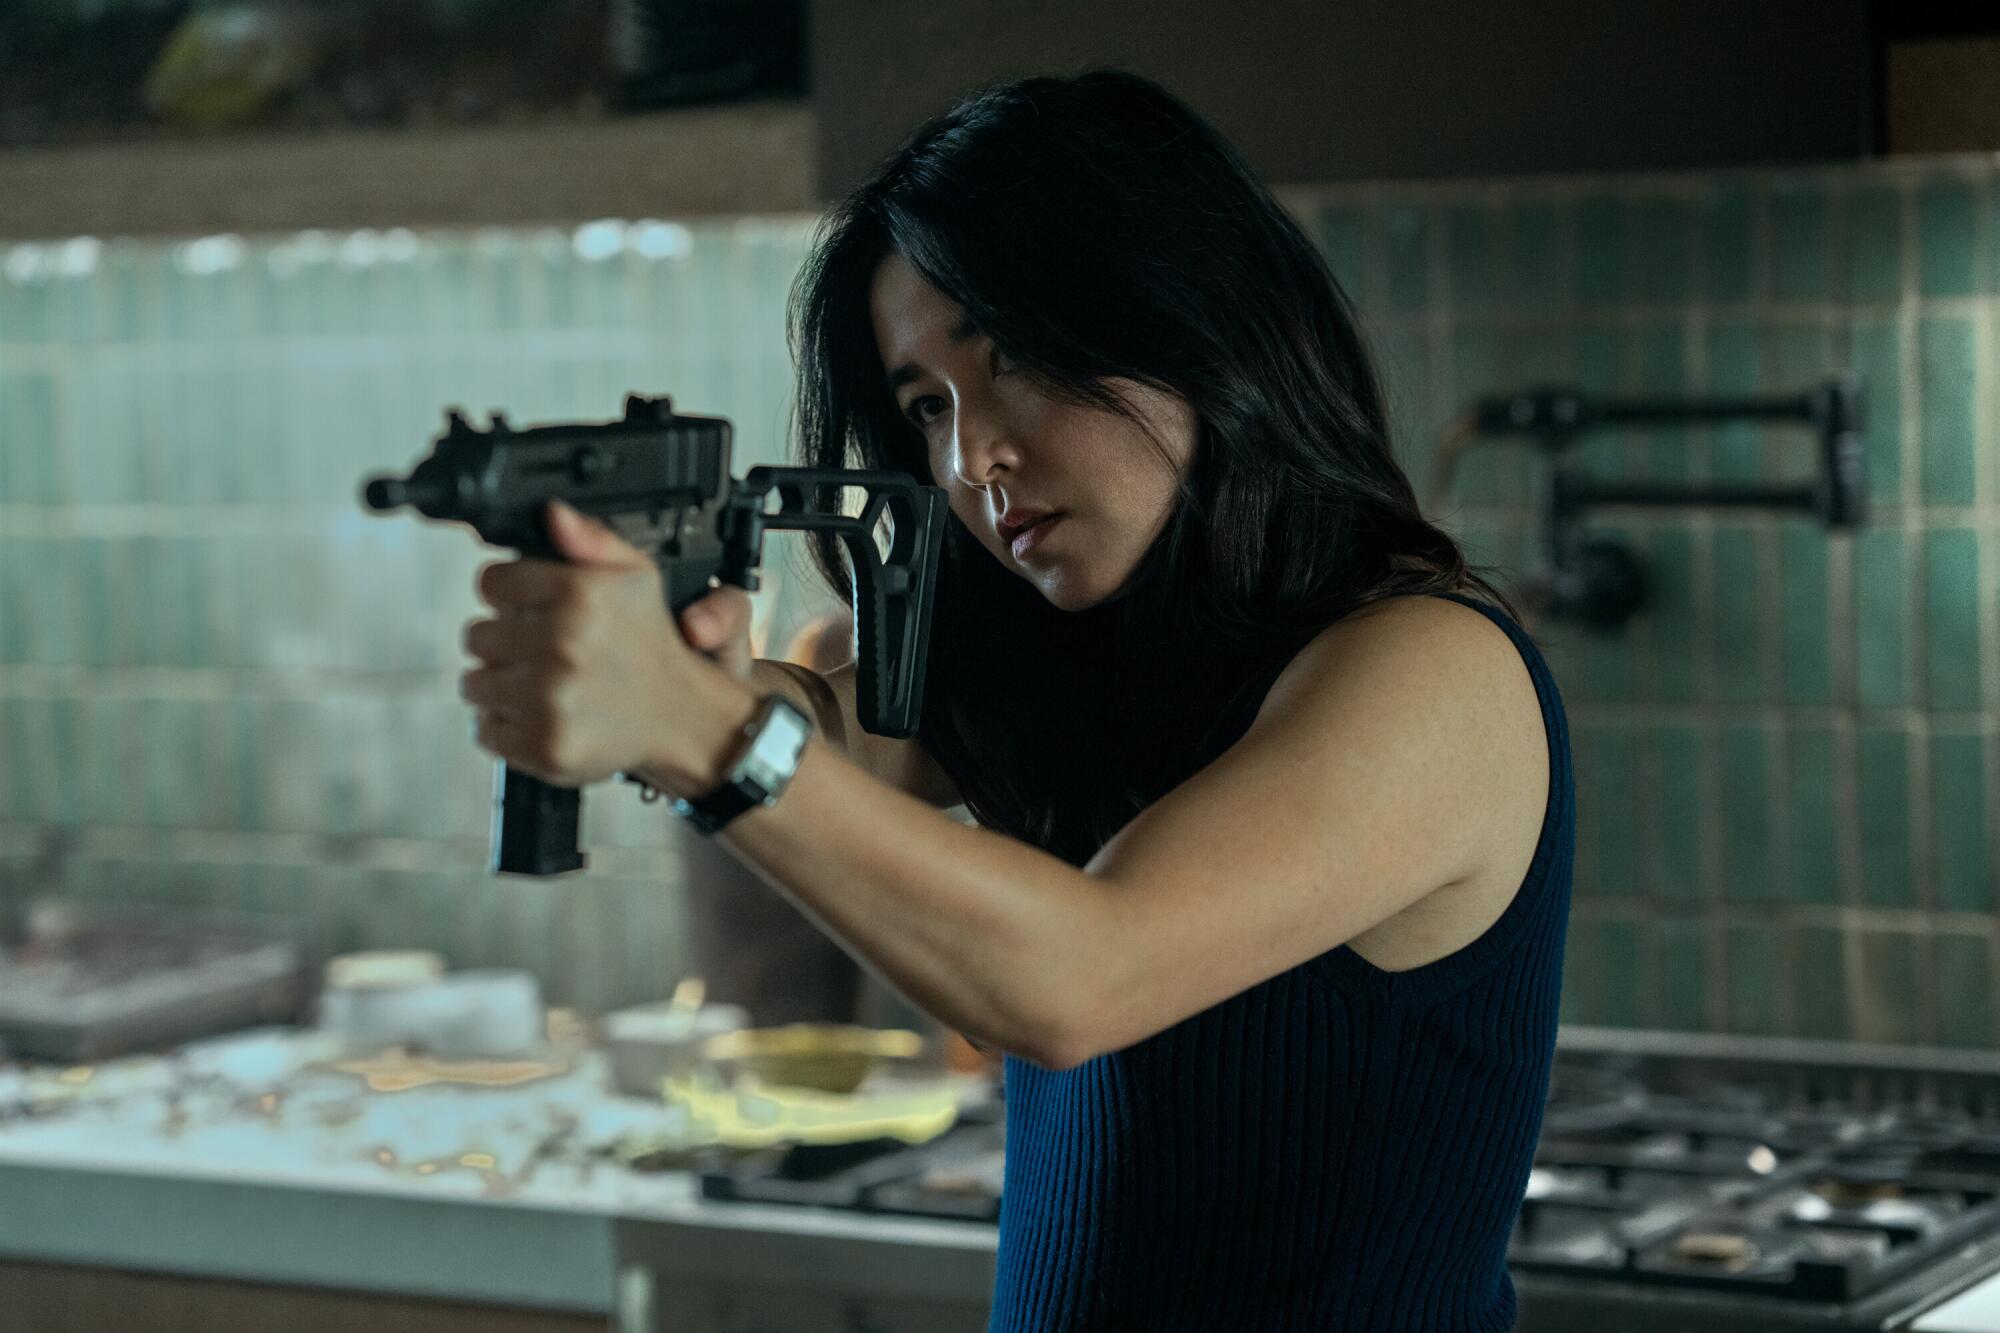 A woman holds an assault rifle in a kitchen.